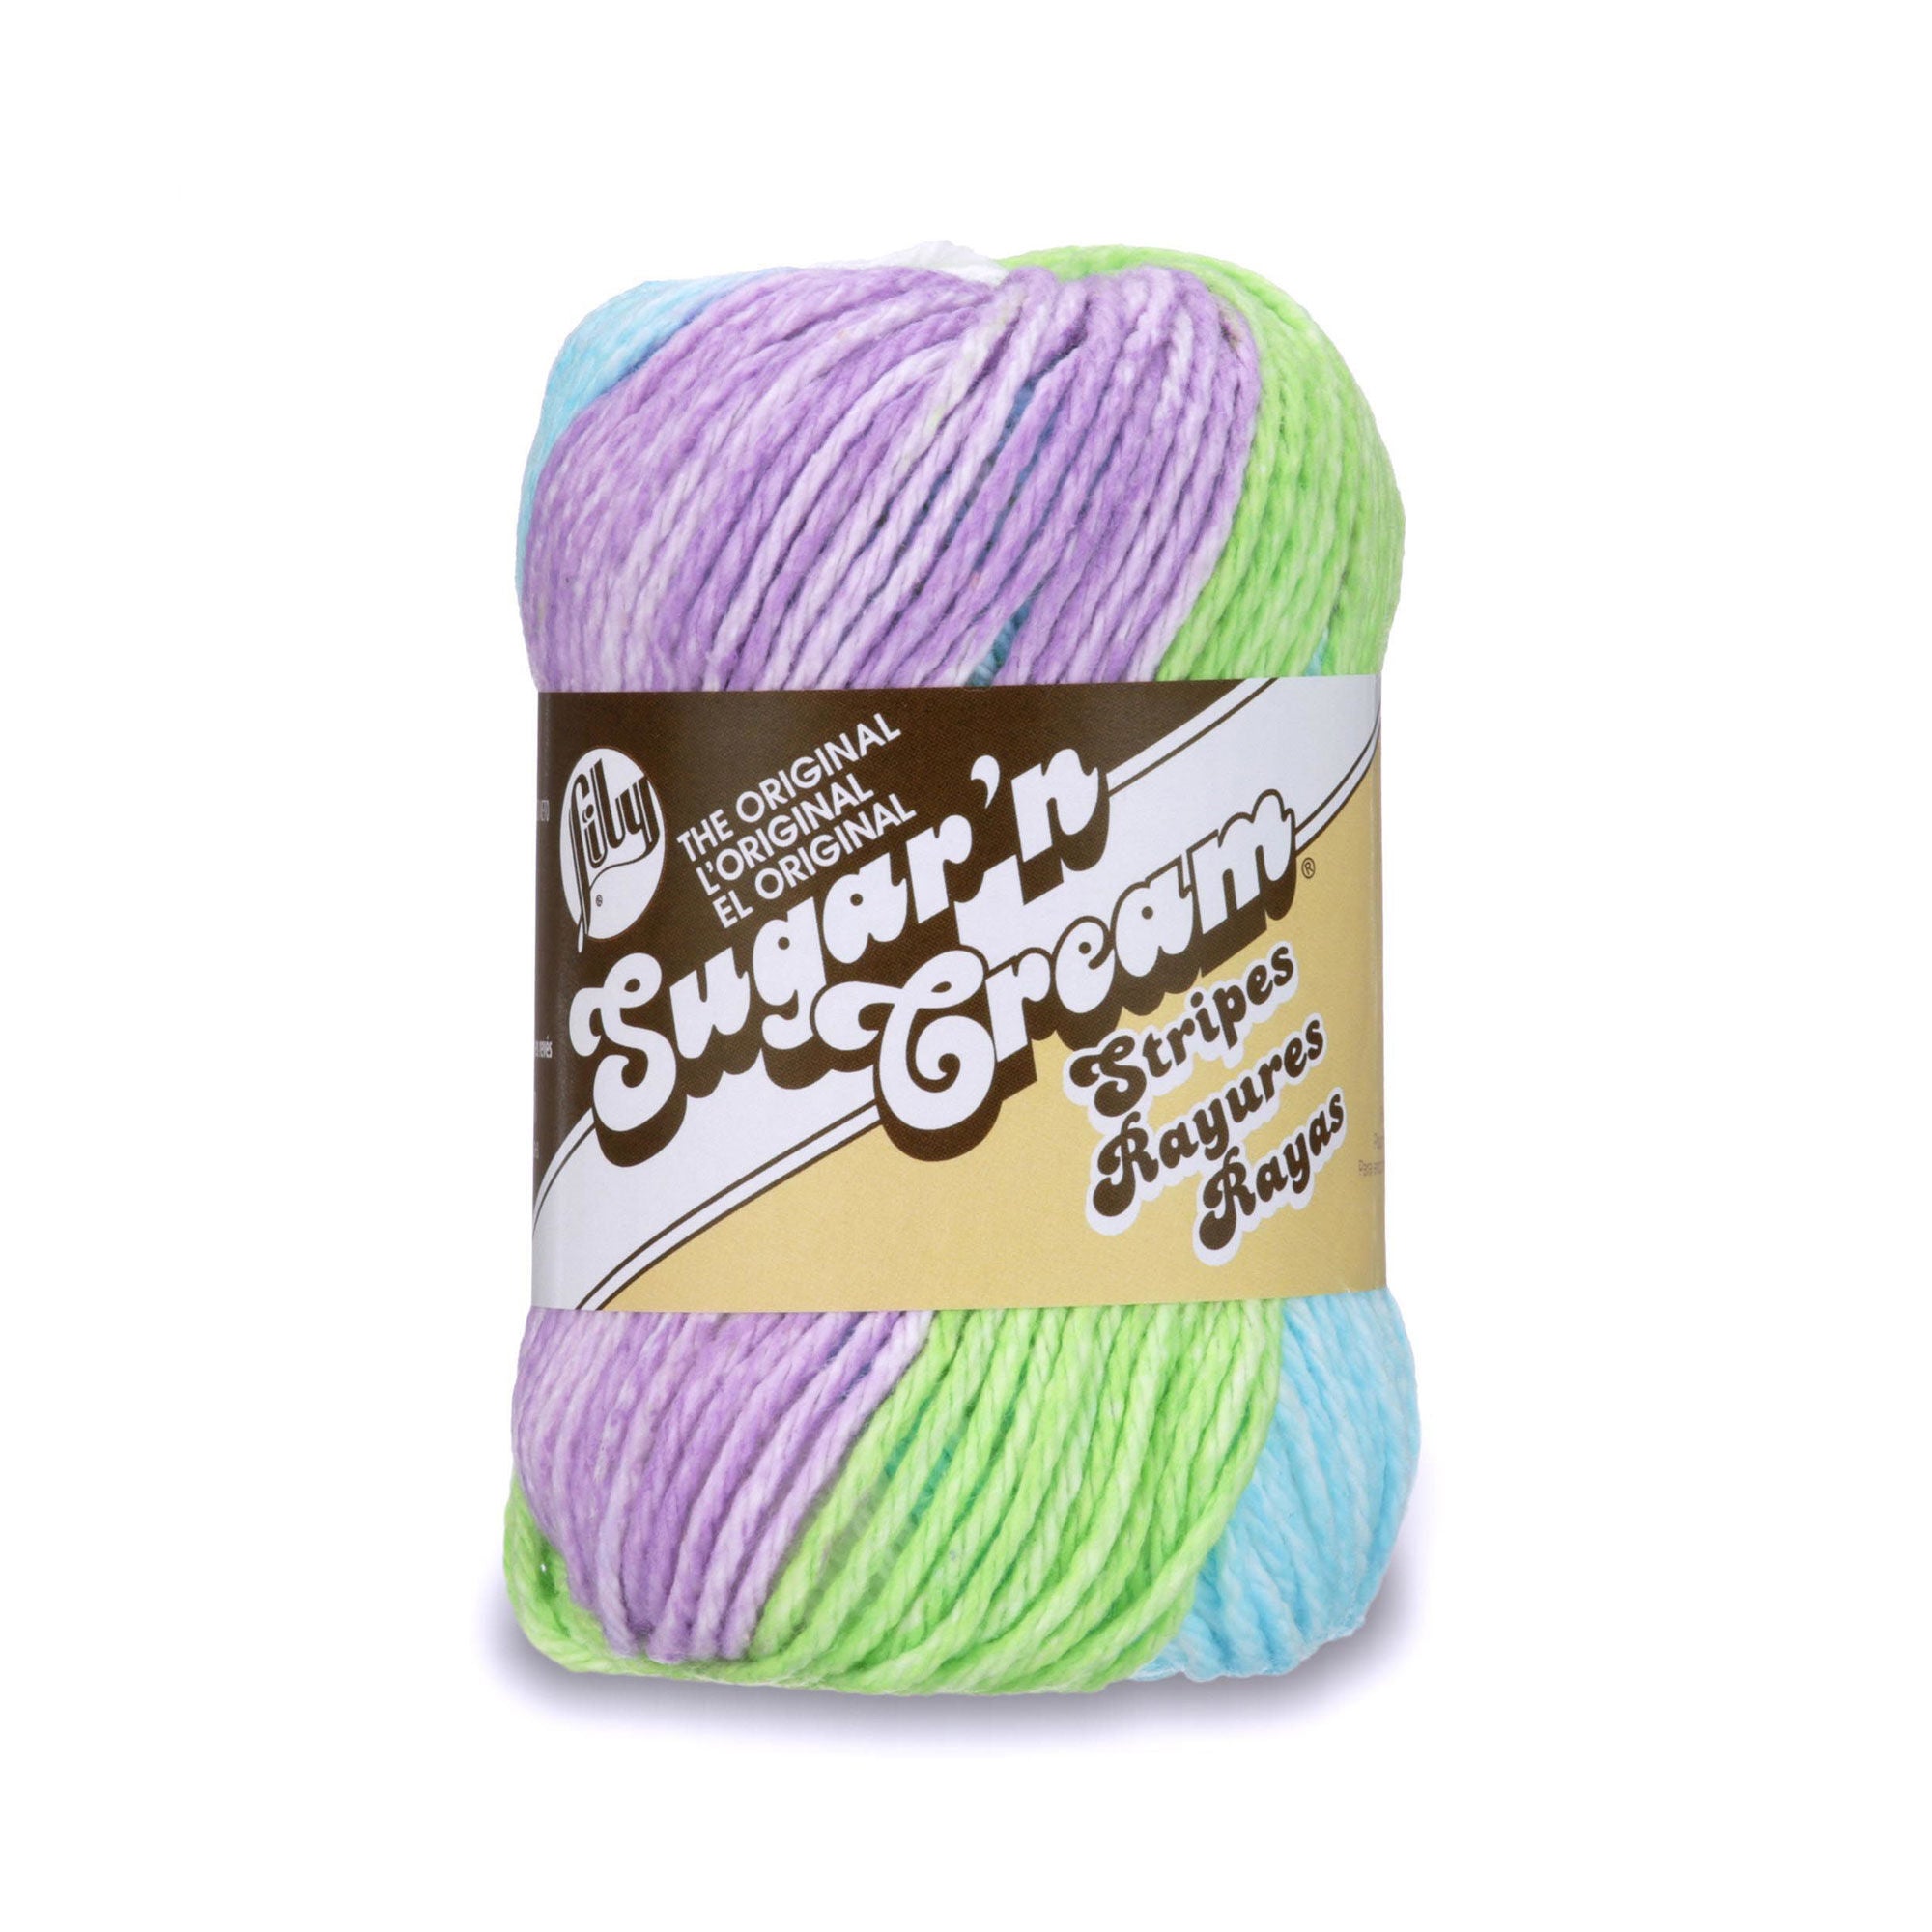 Lily The Original Sugar 'N Cream Yarn Stripes 102021 2 oz – Good's Store  Online